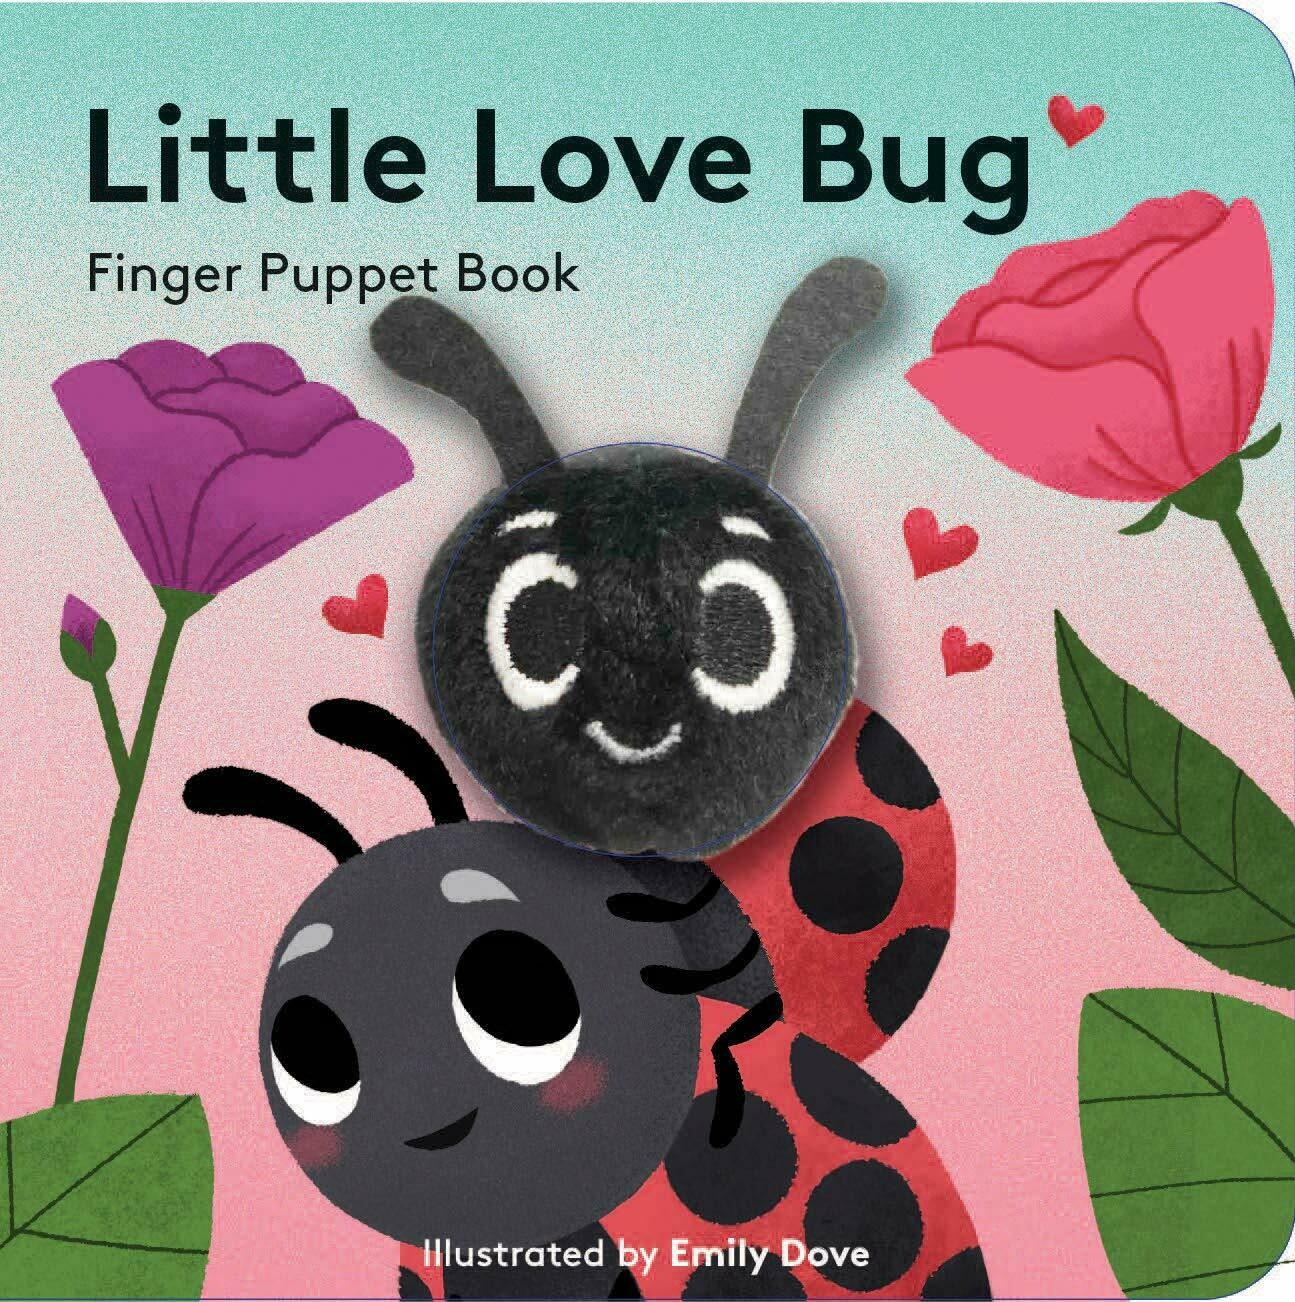 "Little Love Bug" Finger Puppet Book